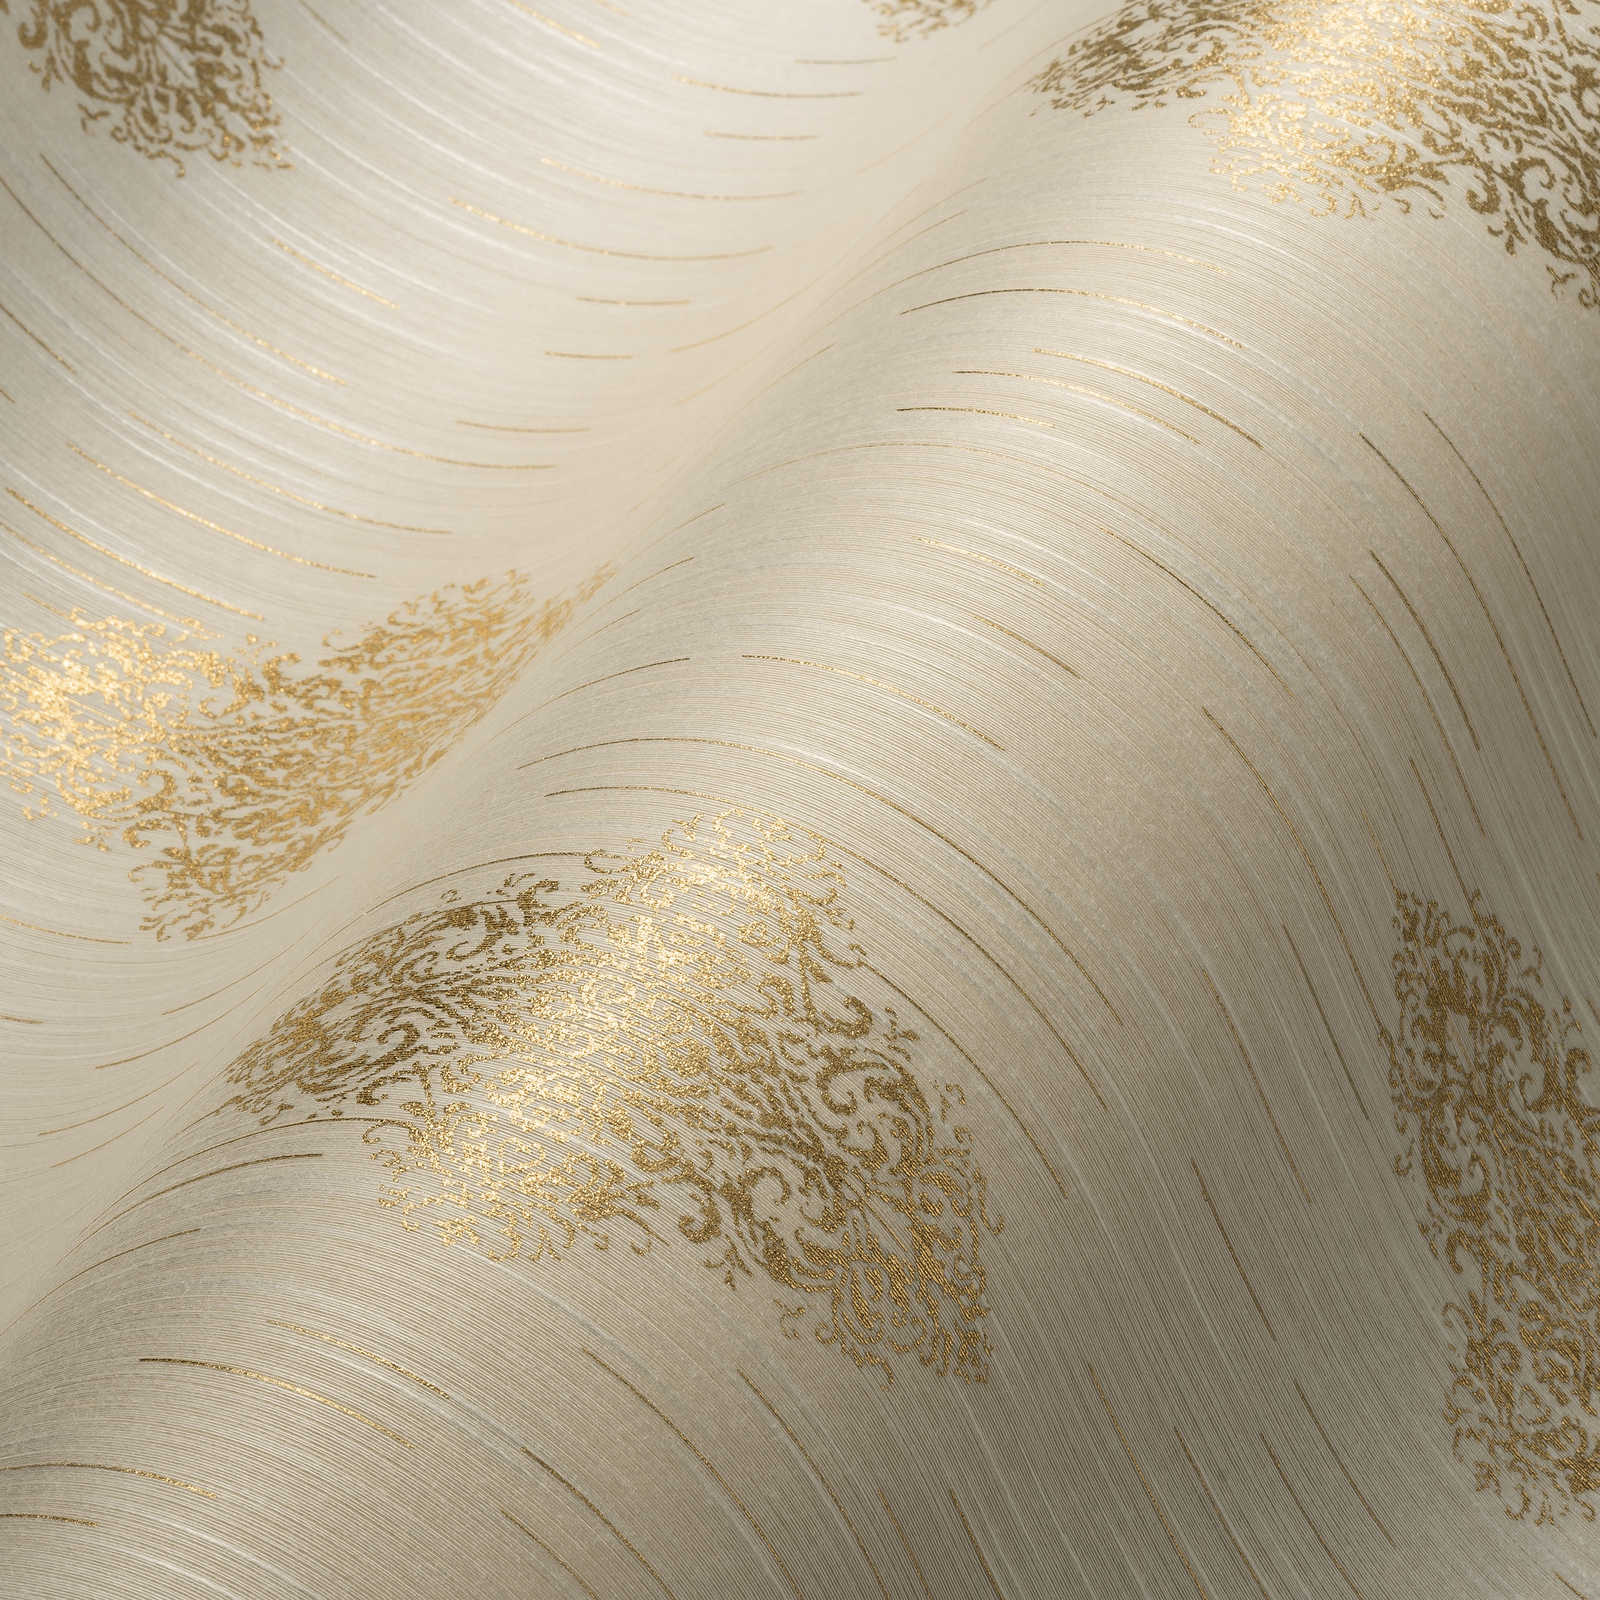             Tapete Ornament-Design im Used-Look, Metallic-Effekt – Creme, Gold
        